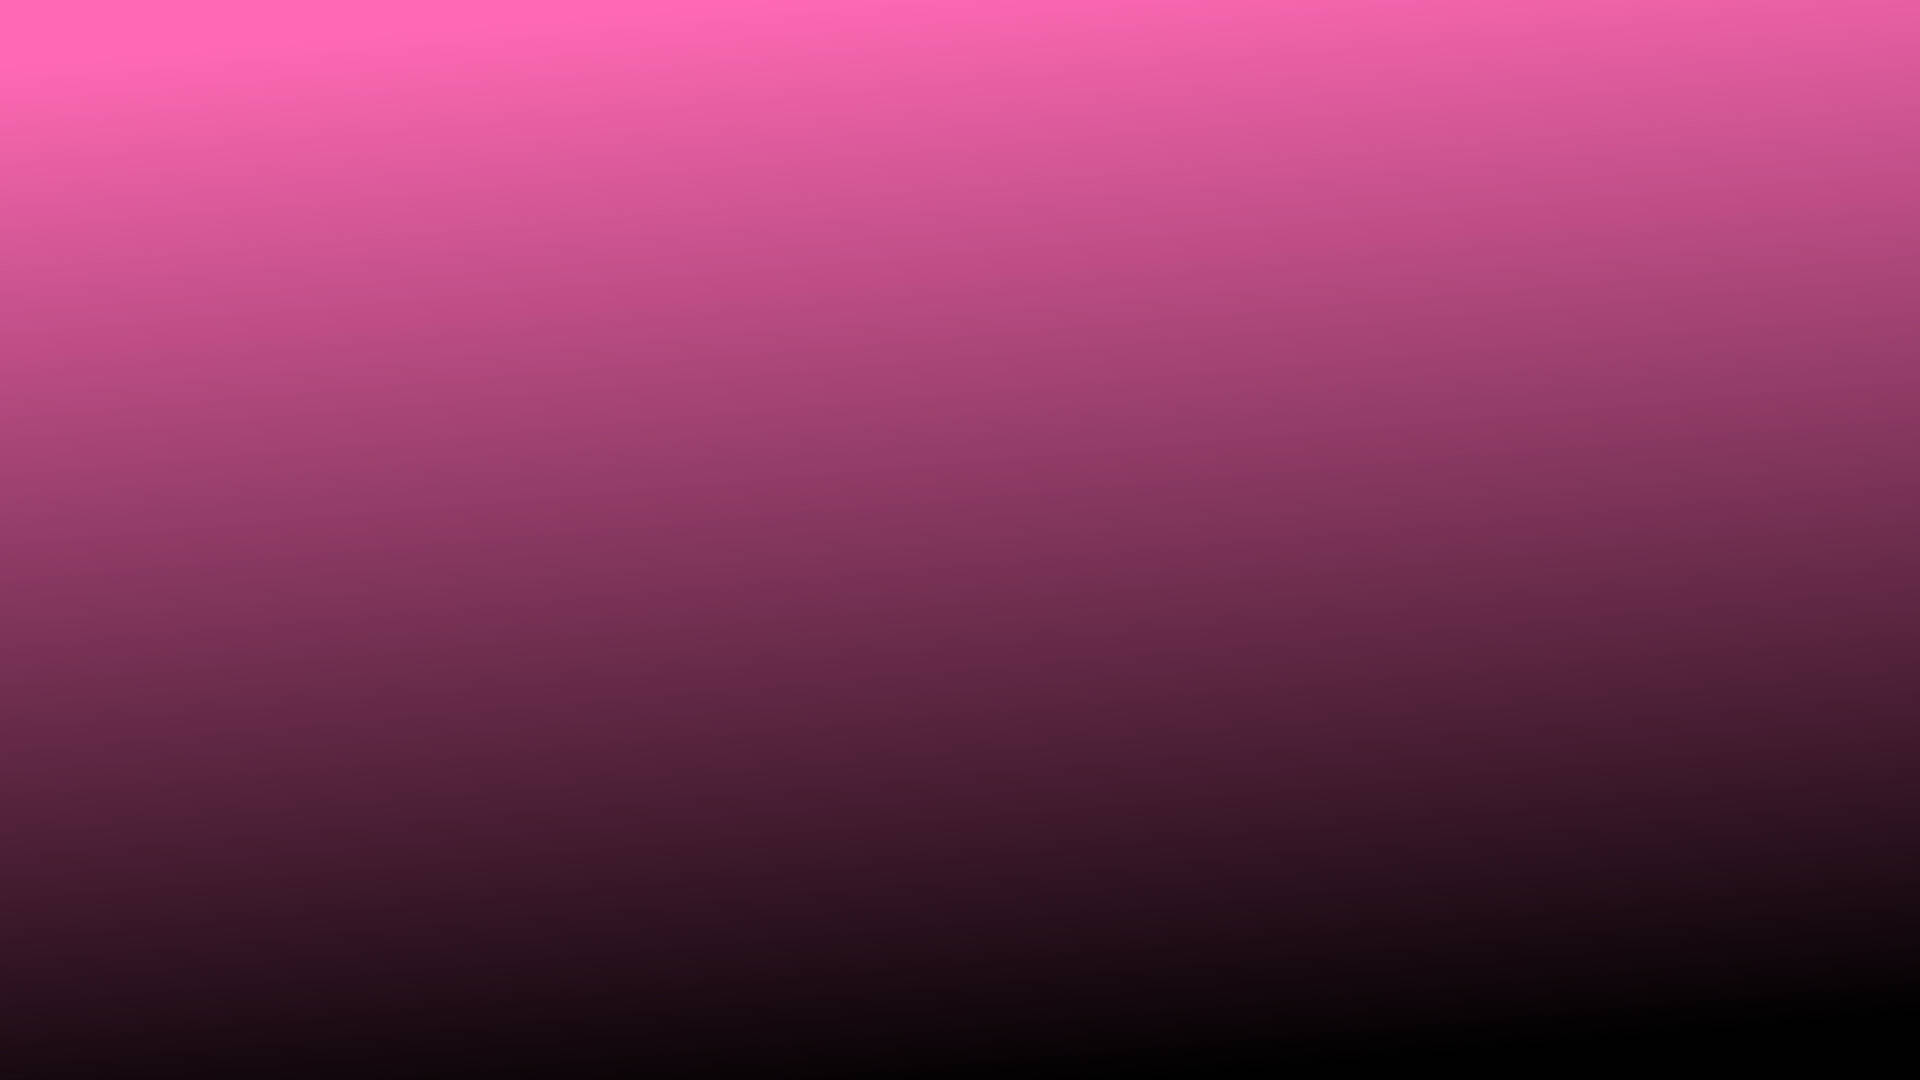 Black And Pink Aesthetic Horizontal Gradient